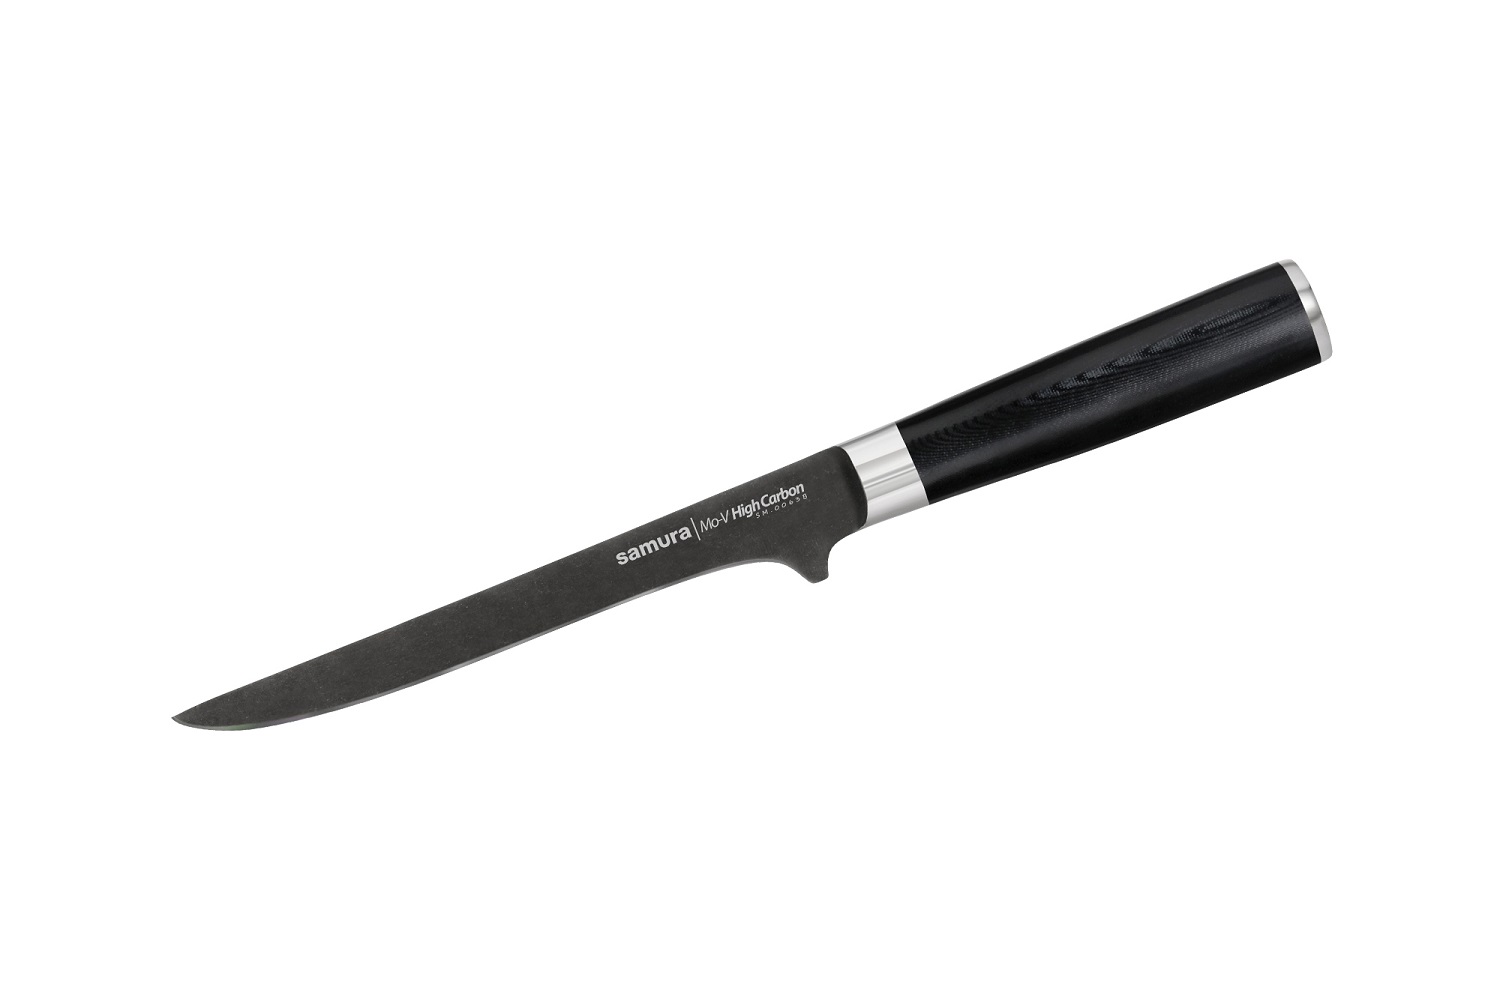 Нож Samura обвалочный Mo-V Stonewash, 16,5 см, G-10 нож samura обвалочный mo v stonewash 16 5 см g 10